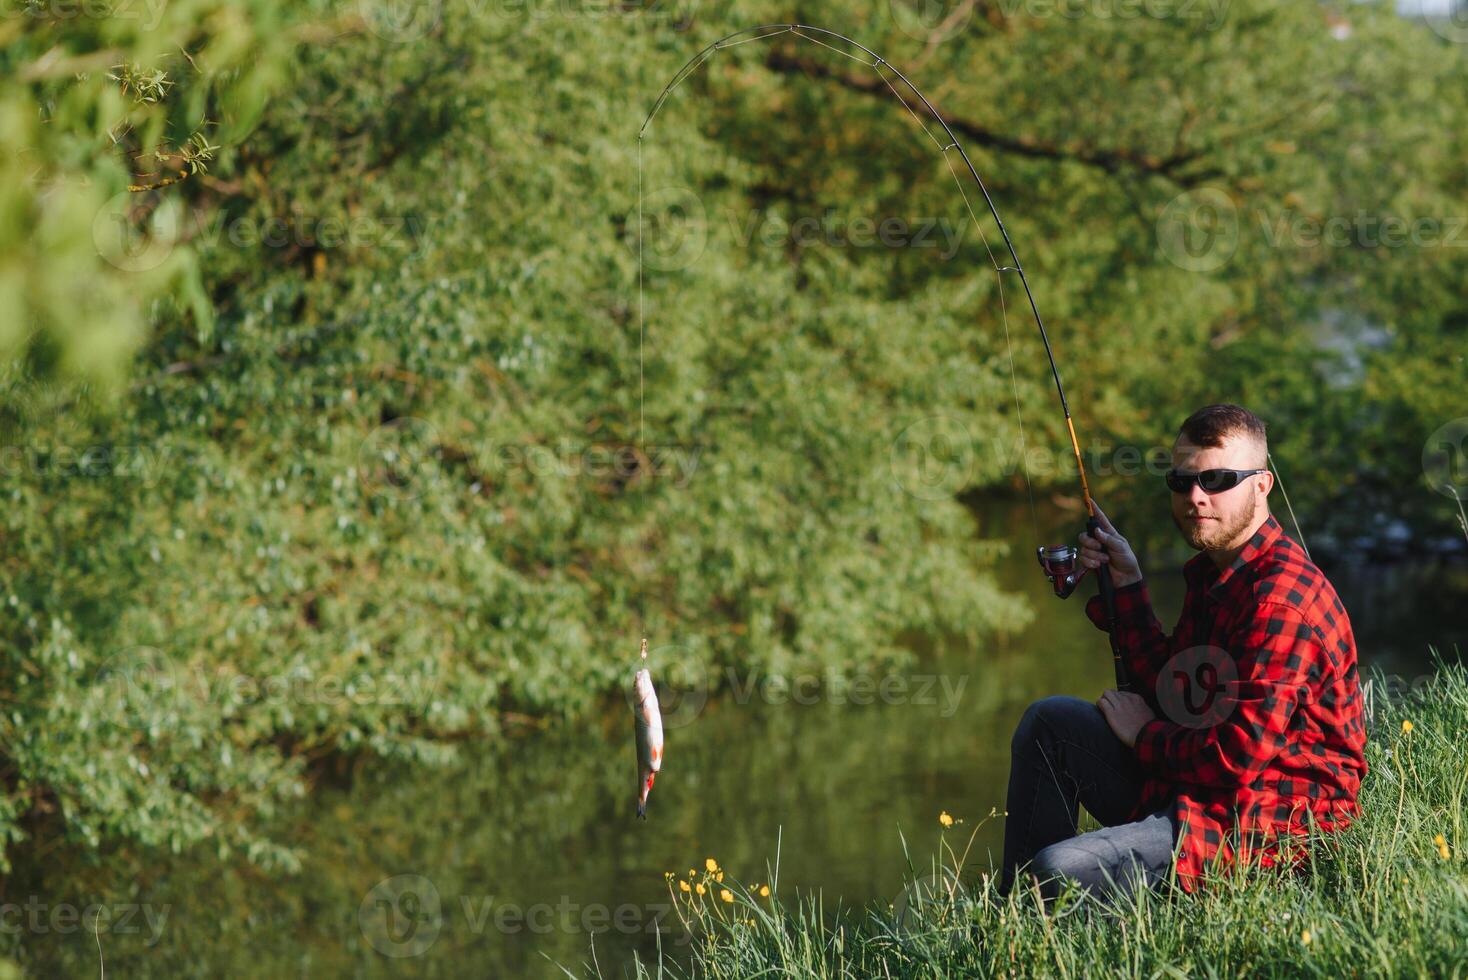 pescador hombre pescar con hilado varilla en un río banco, girar pesca, presa pescar foto